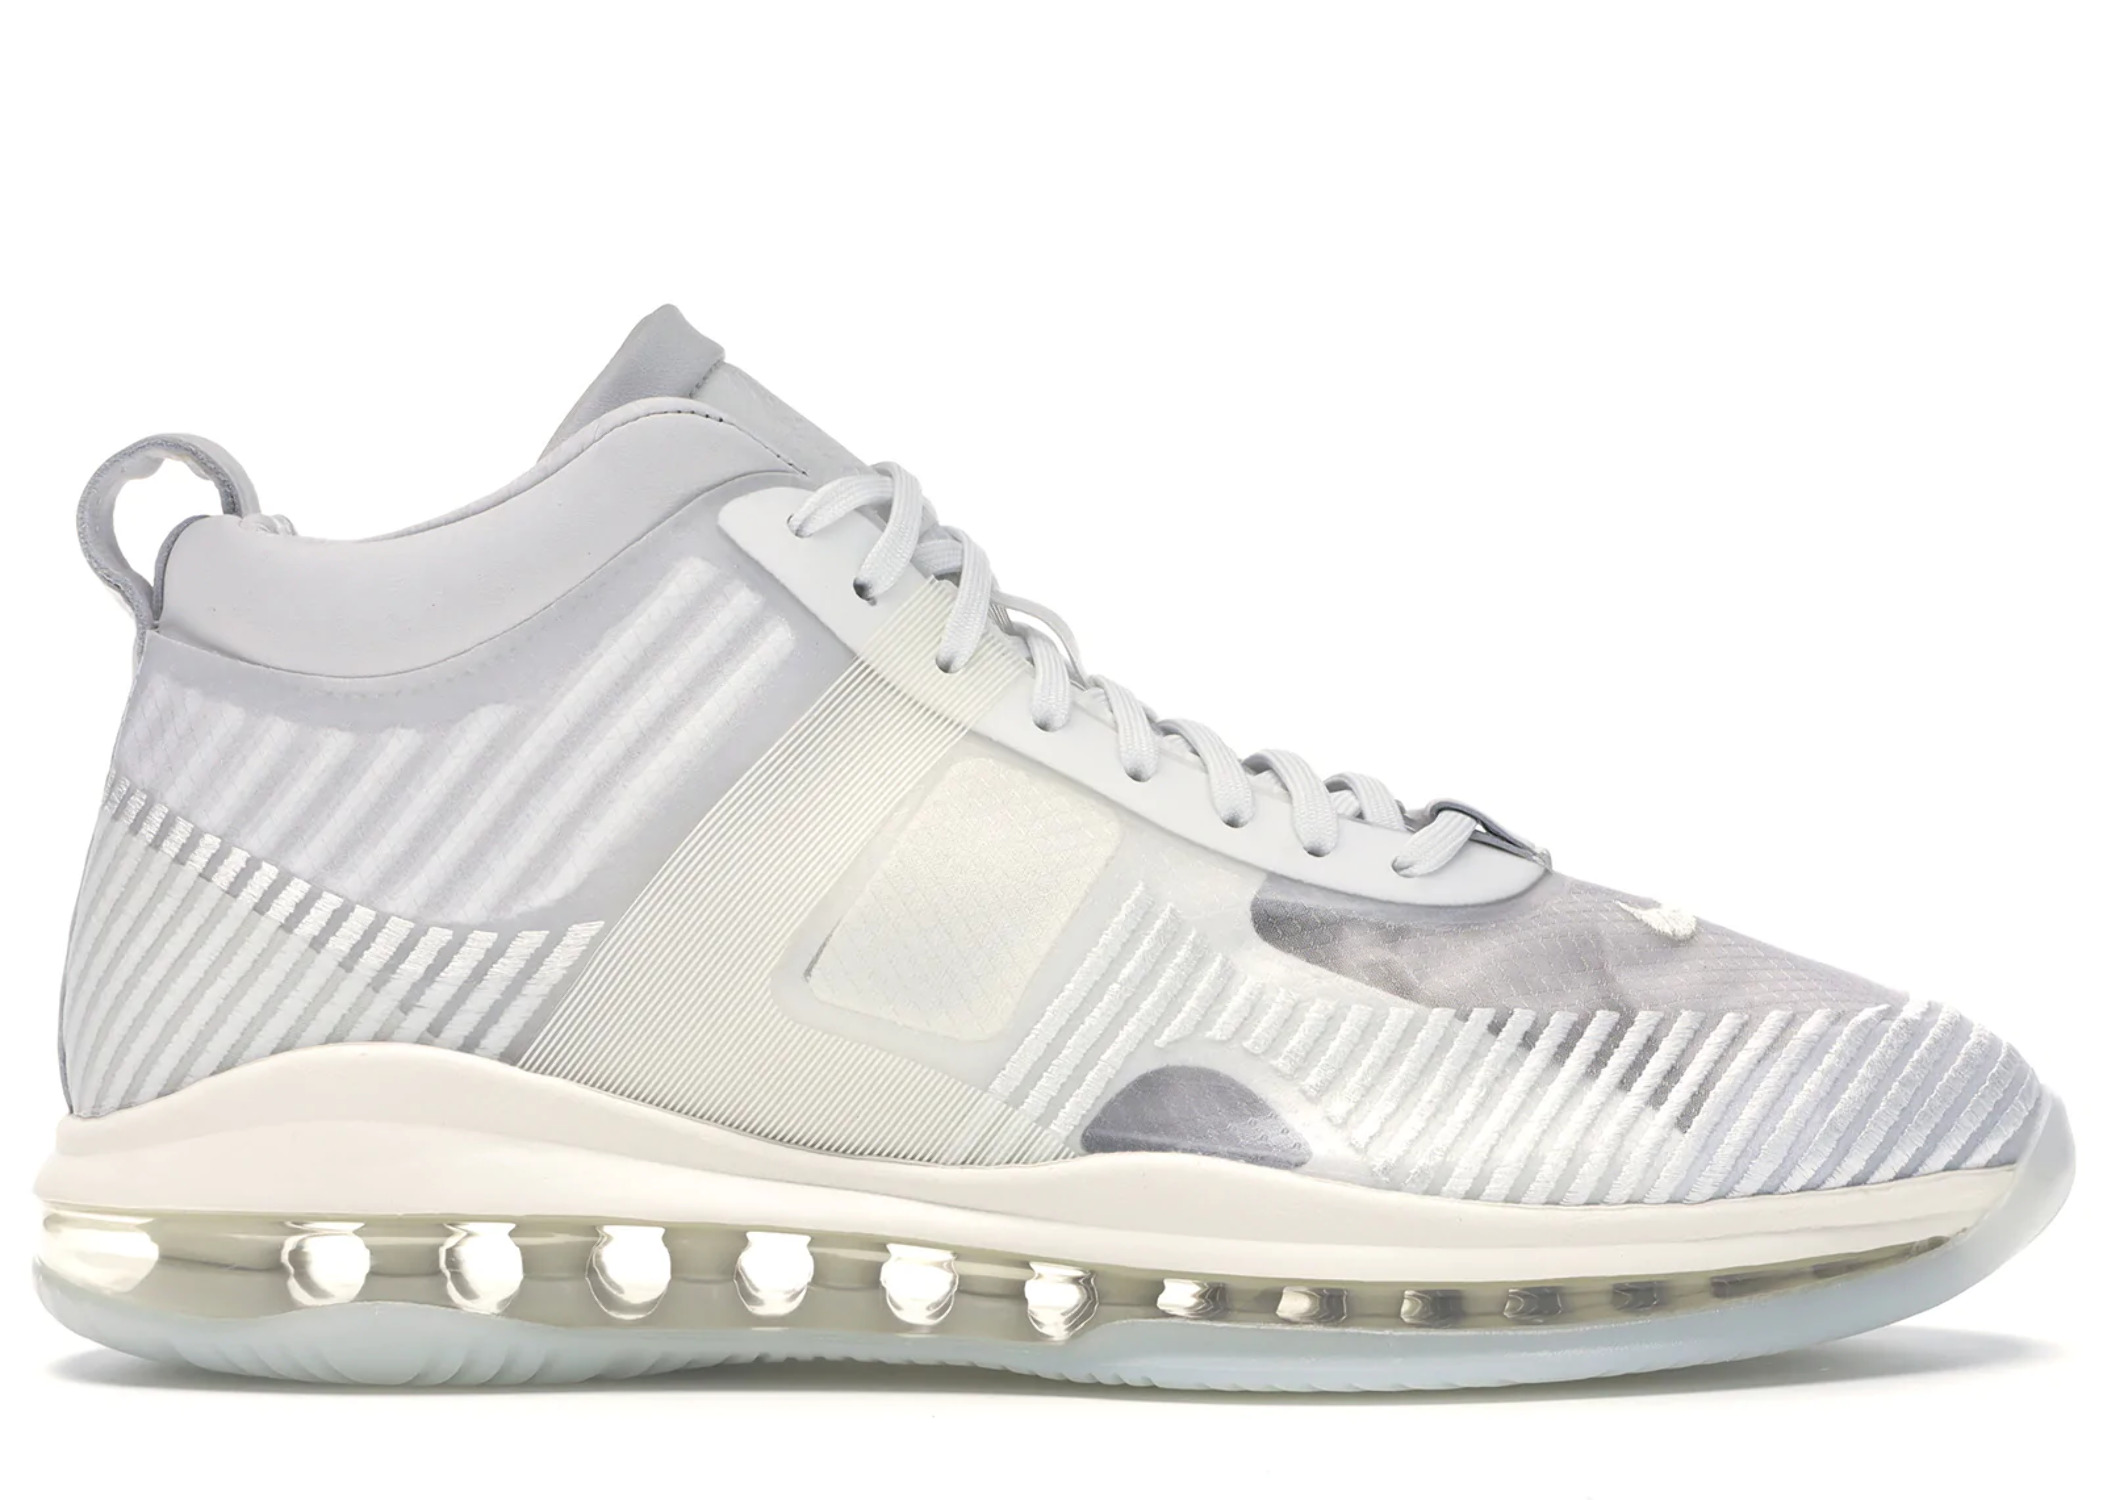 Nike Lebron X JE Icon QS Men's Shoes White-Sail-Summit White aq0114-101 - image 1 of 6